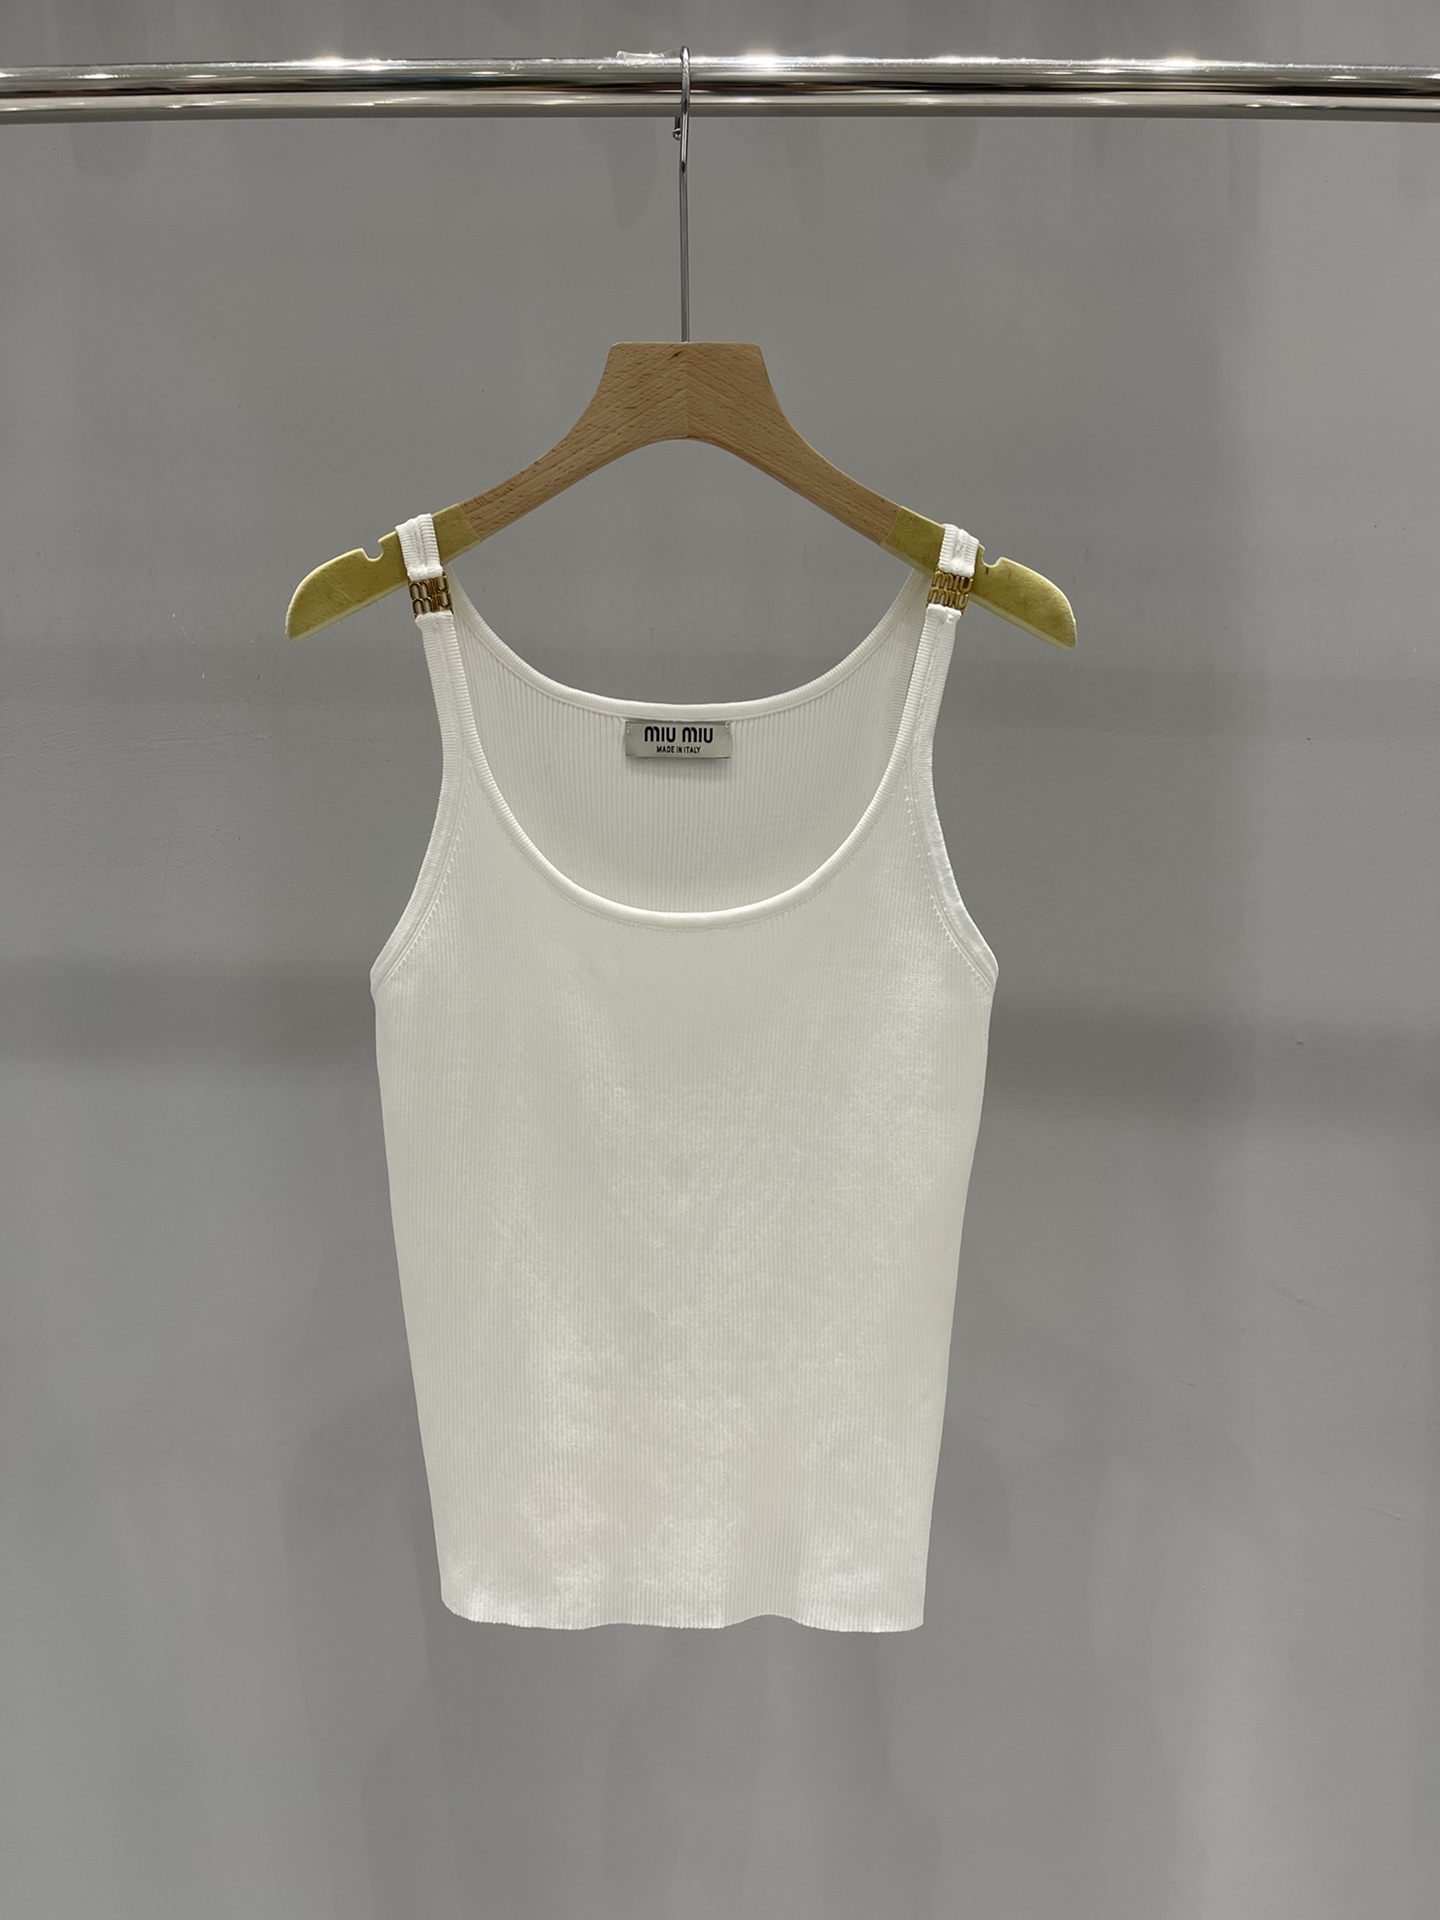 MiuMiu Clothing Tank Tops&Camis Black White Knitting Spring/Summer Collection